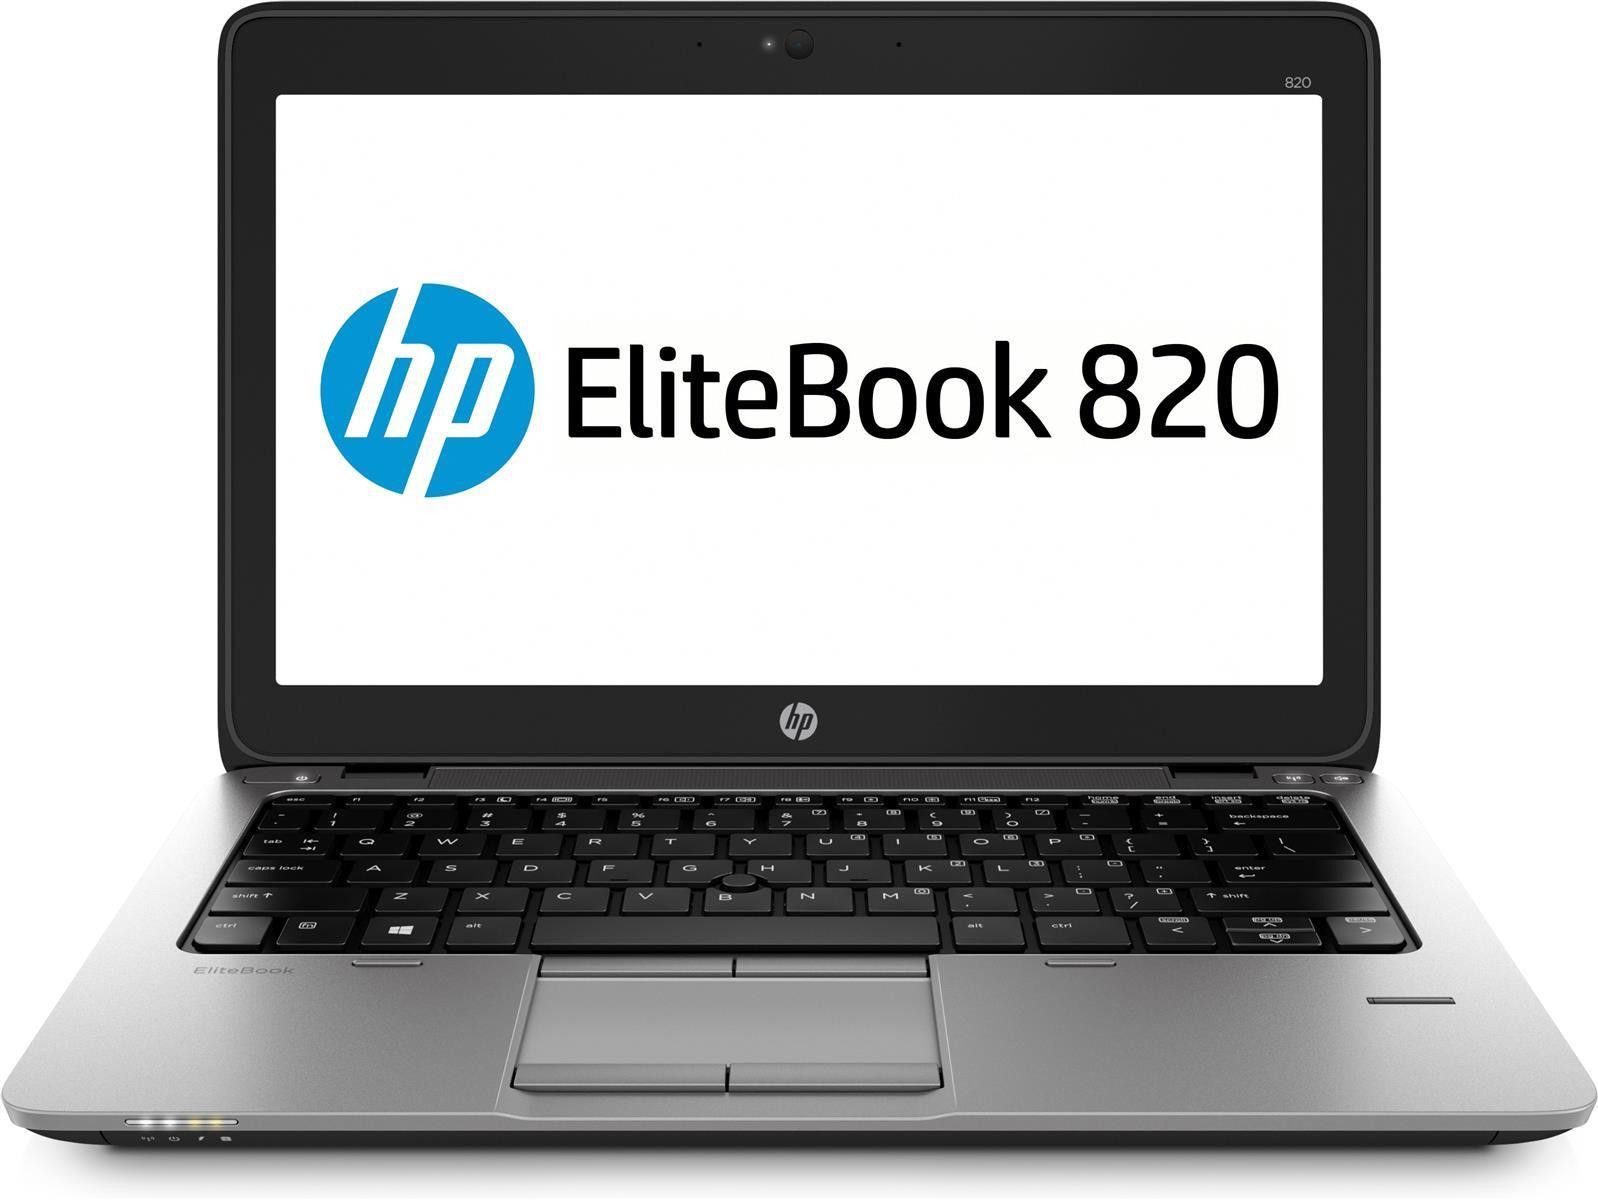 HP EliteBook 820 G1 Intel Core i5-4210U 1.70GHz 8GB RAM 256GB SSD Webcam W10P